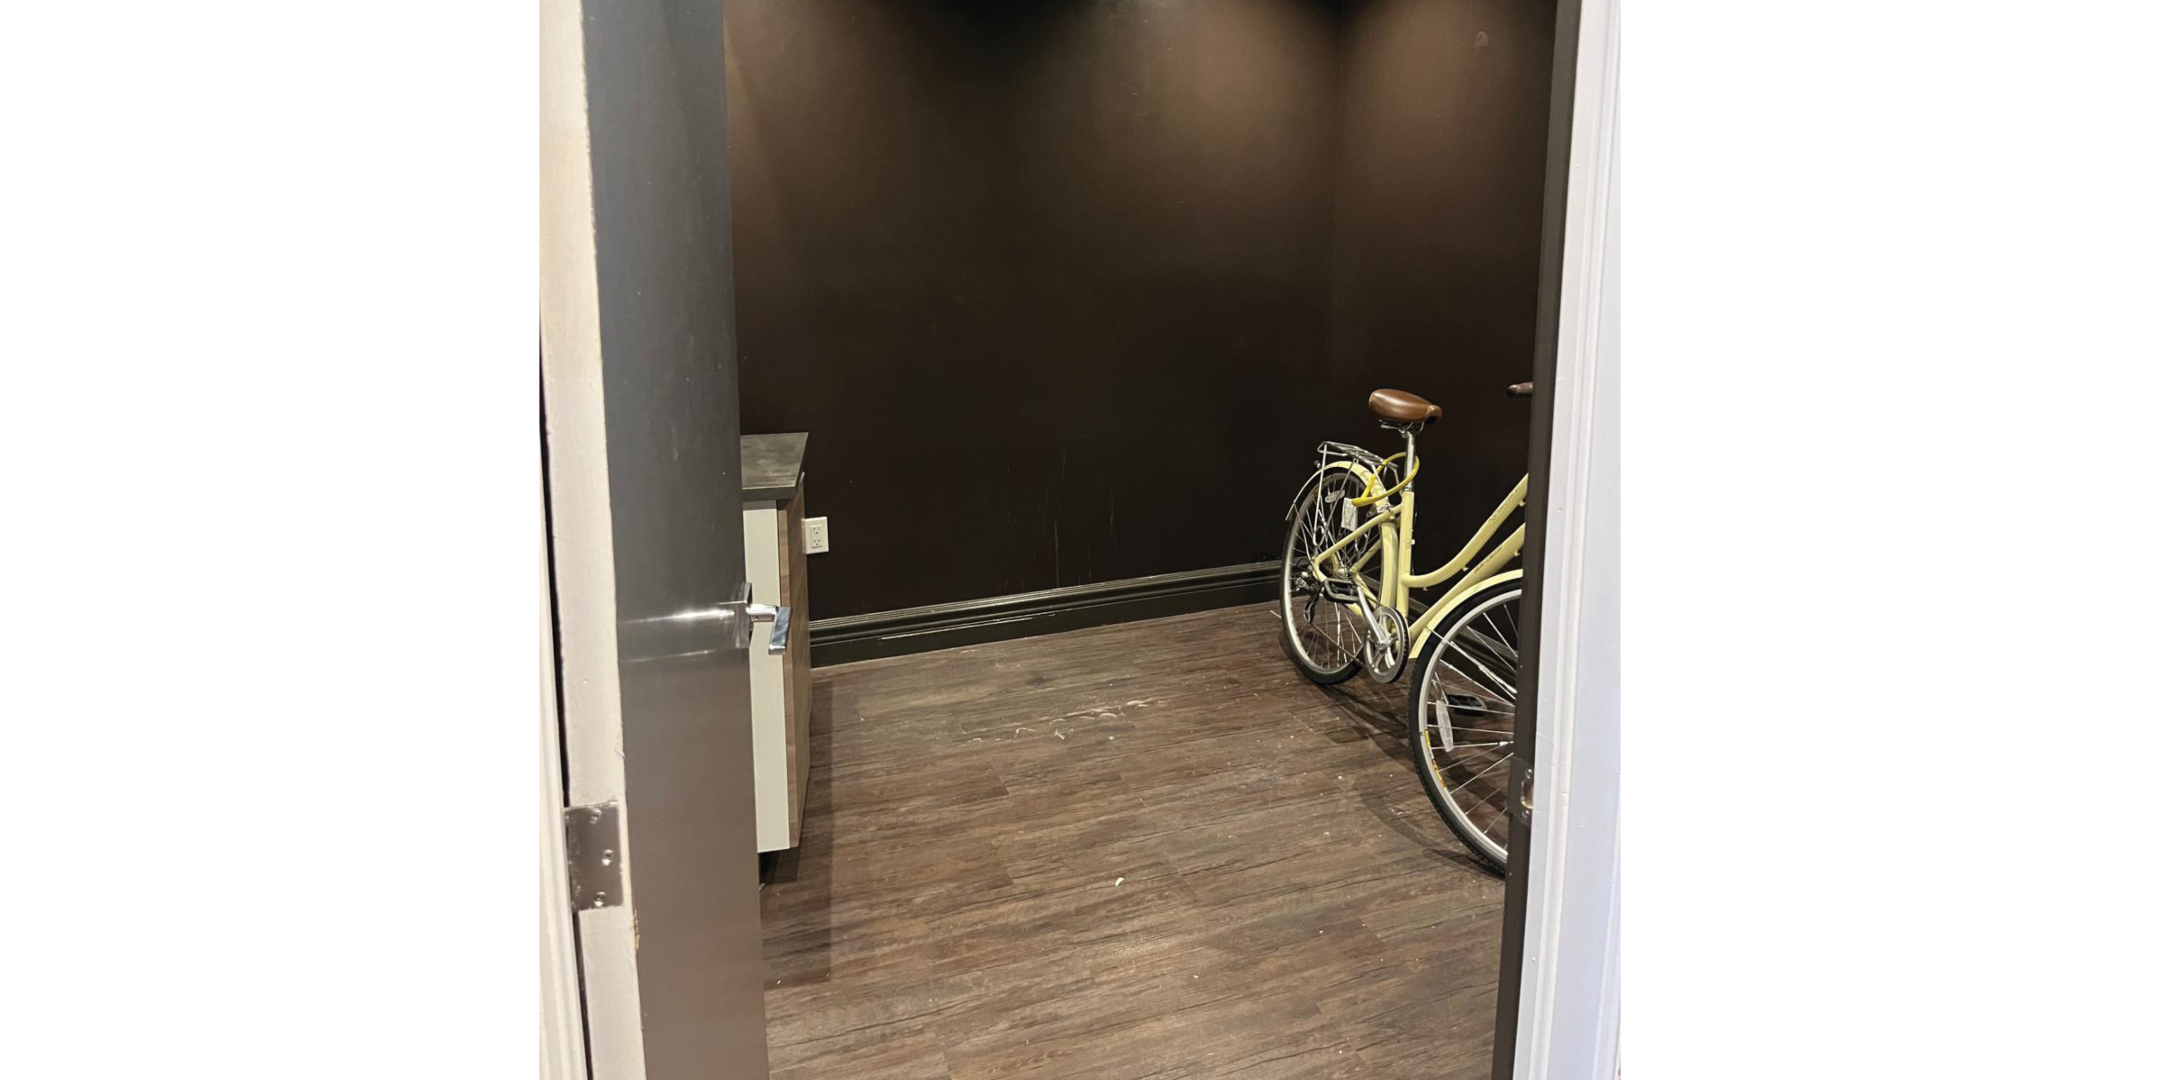 Storage room with a bike inside